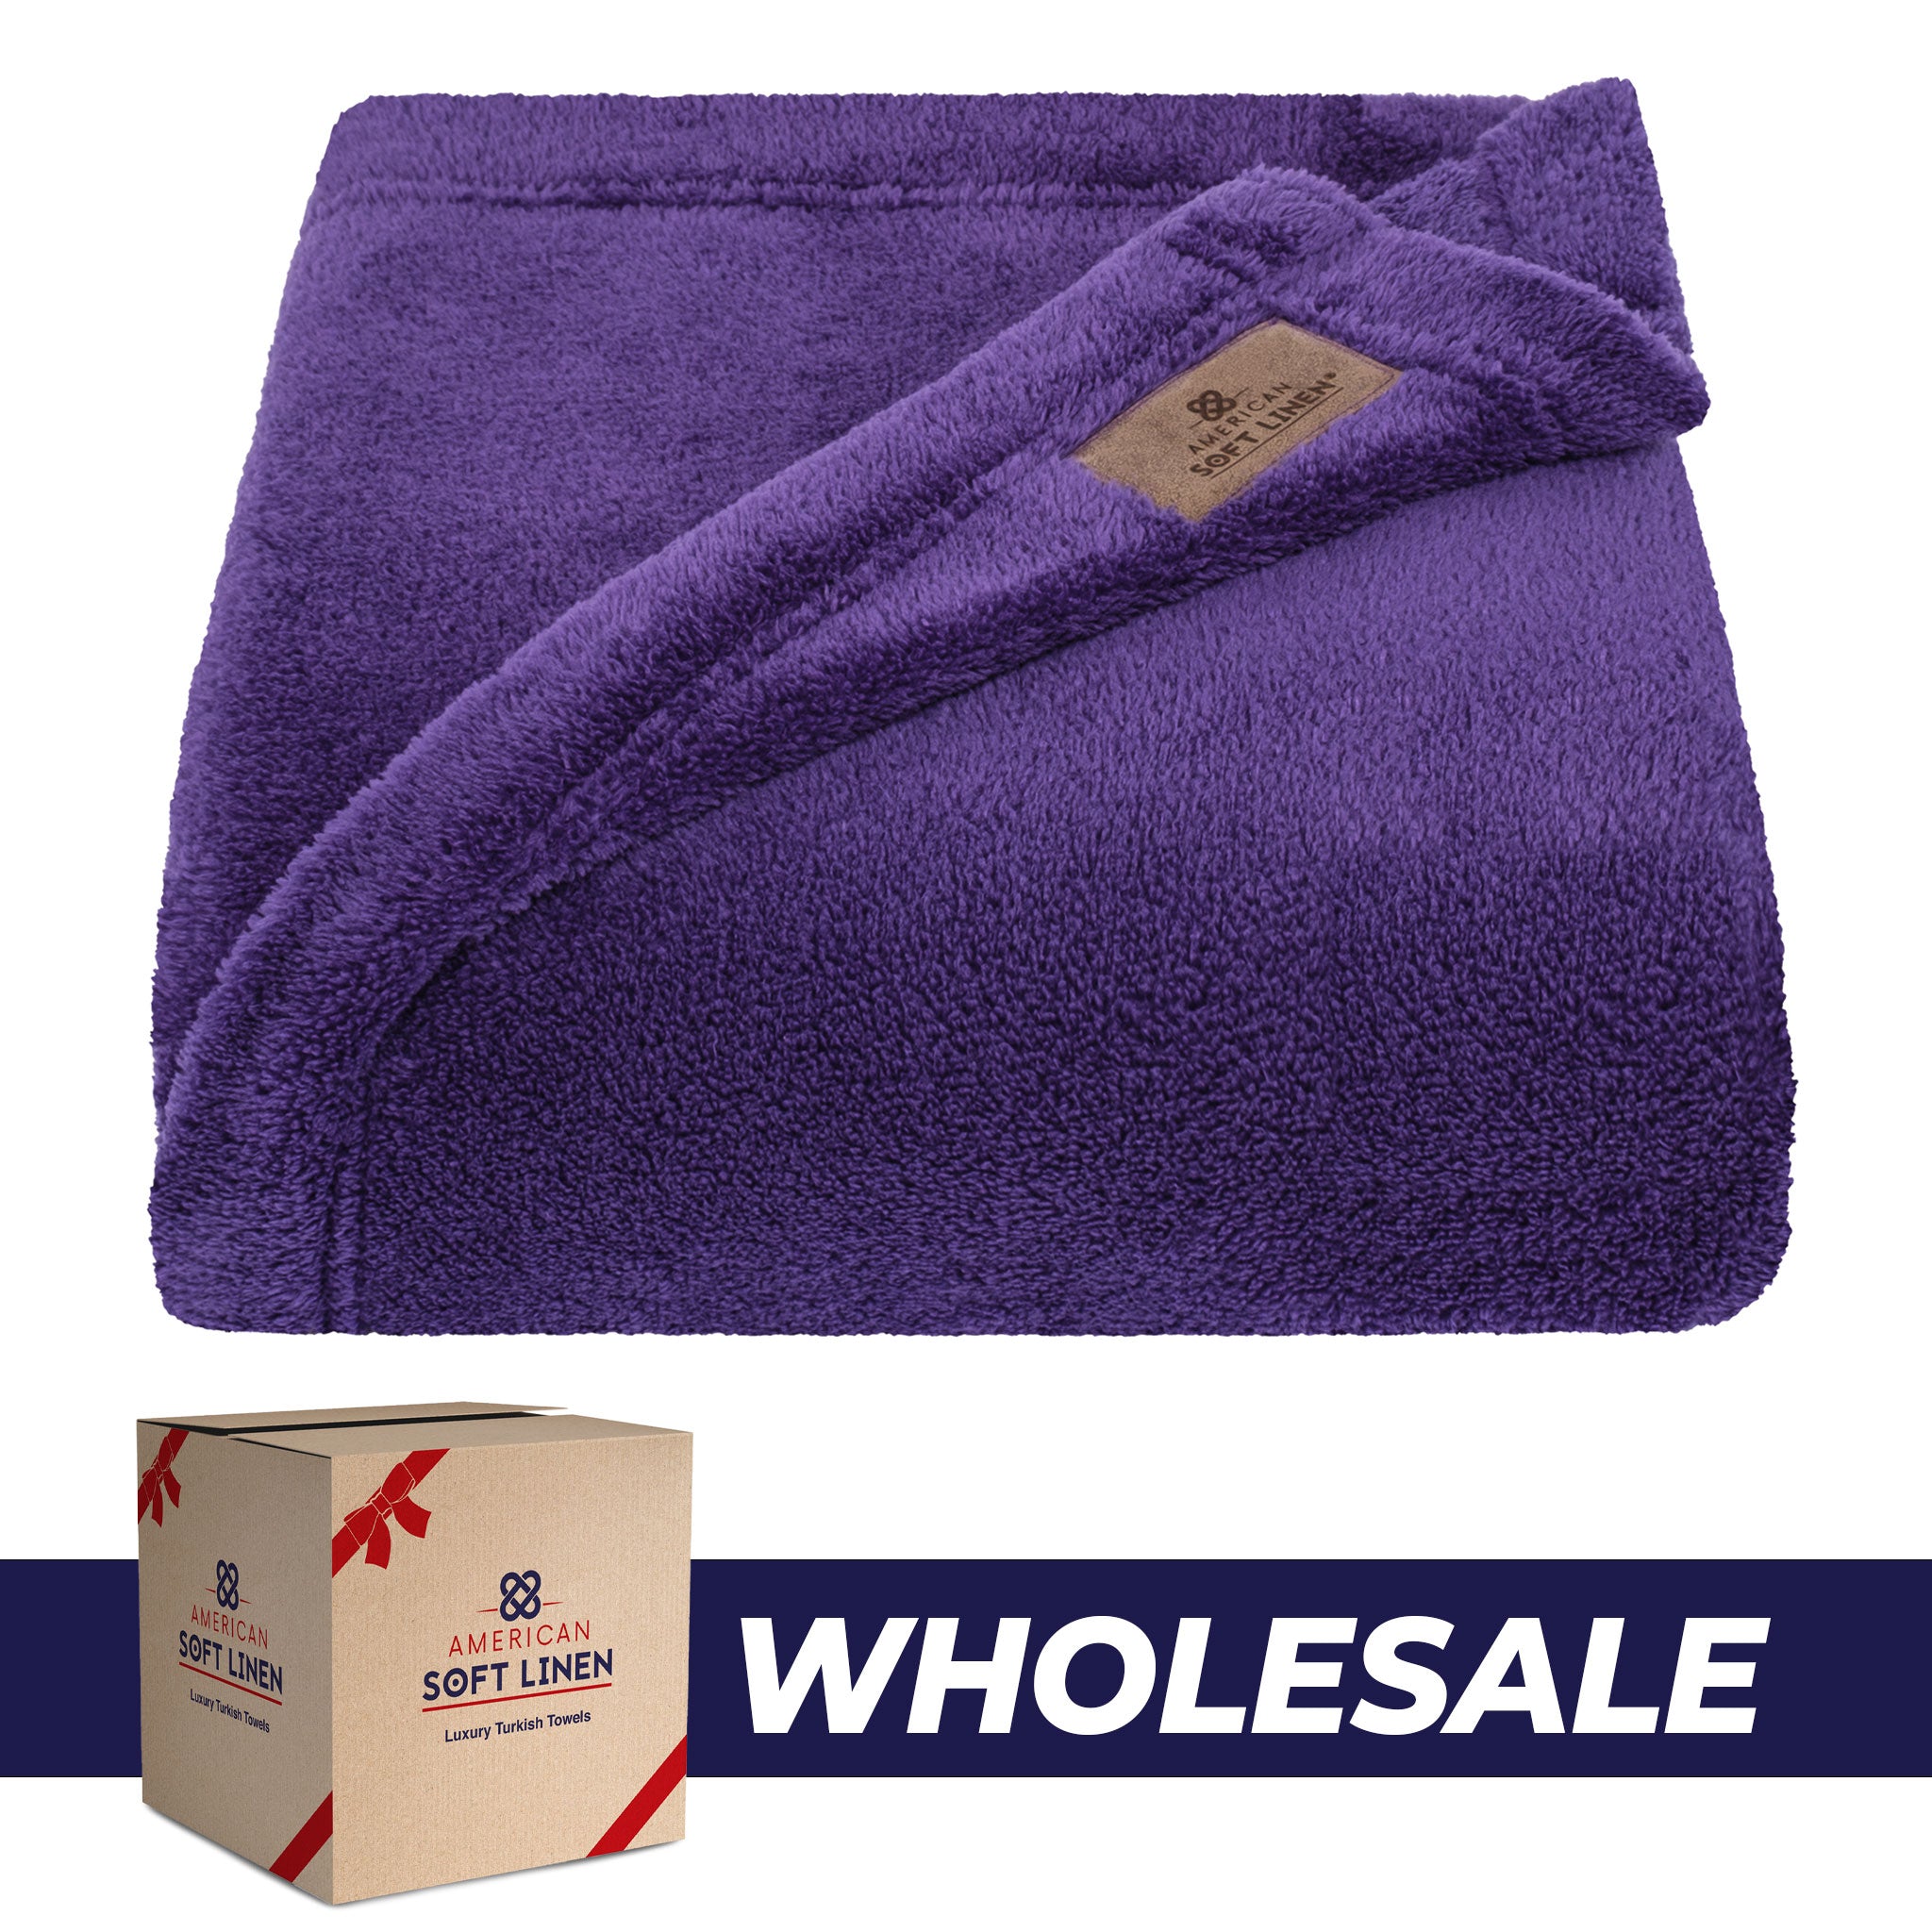 American Soft Linen - Bedding Fleece Blanket - Wholesale - 24 Set Case Pack - Throw Size 50x60 inches - Purple - 0